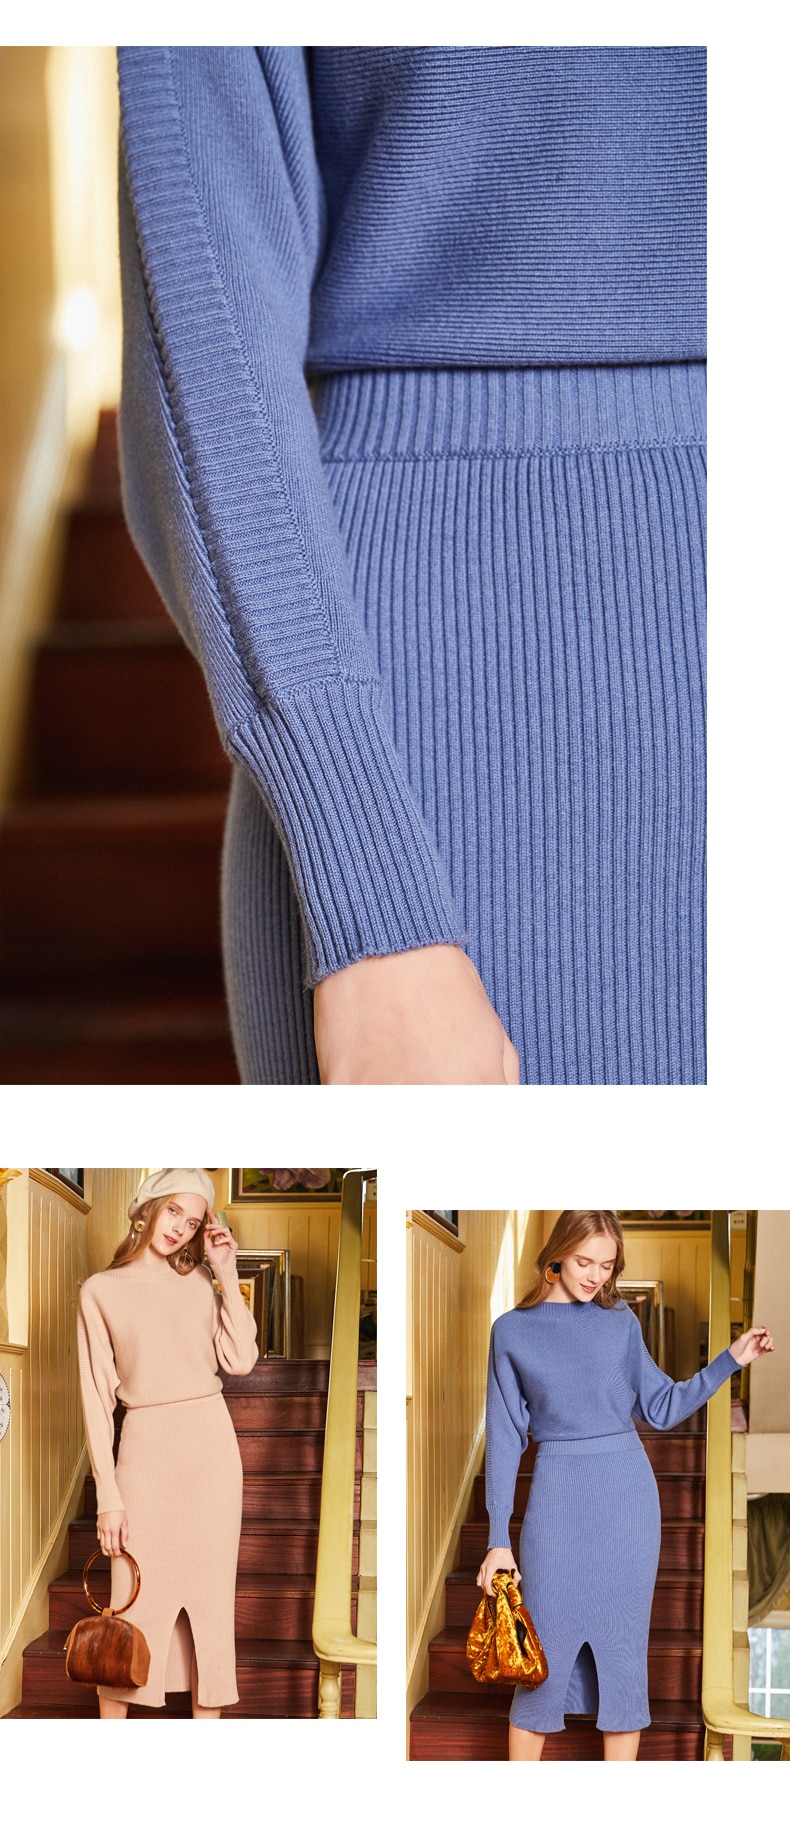 ARTKA Spring New Women's Solid Color Simple Split Sheath Knit Long Dress JL17045